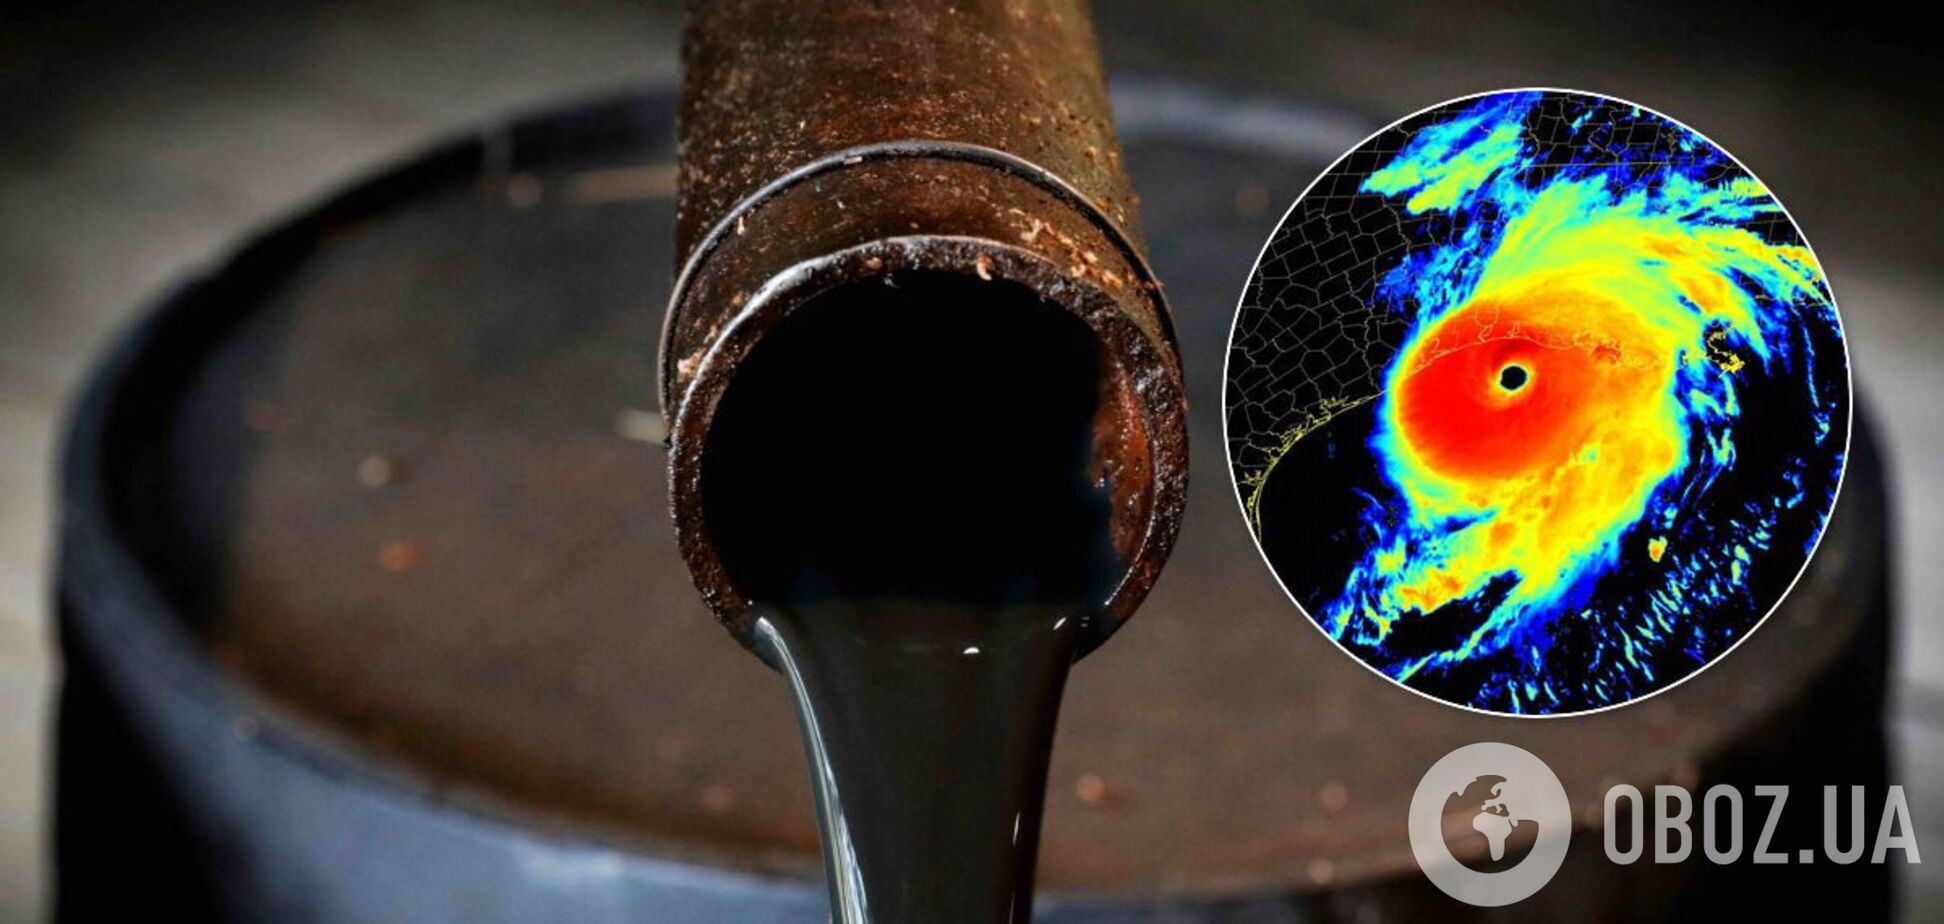 Ценам на нефть предсказали резкий рост из-за урагана в США